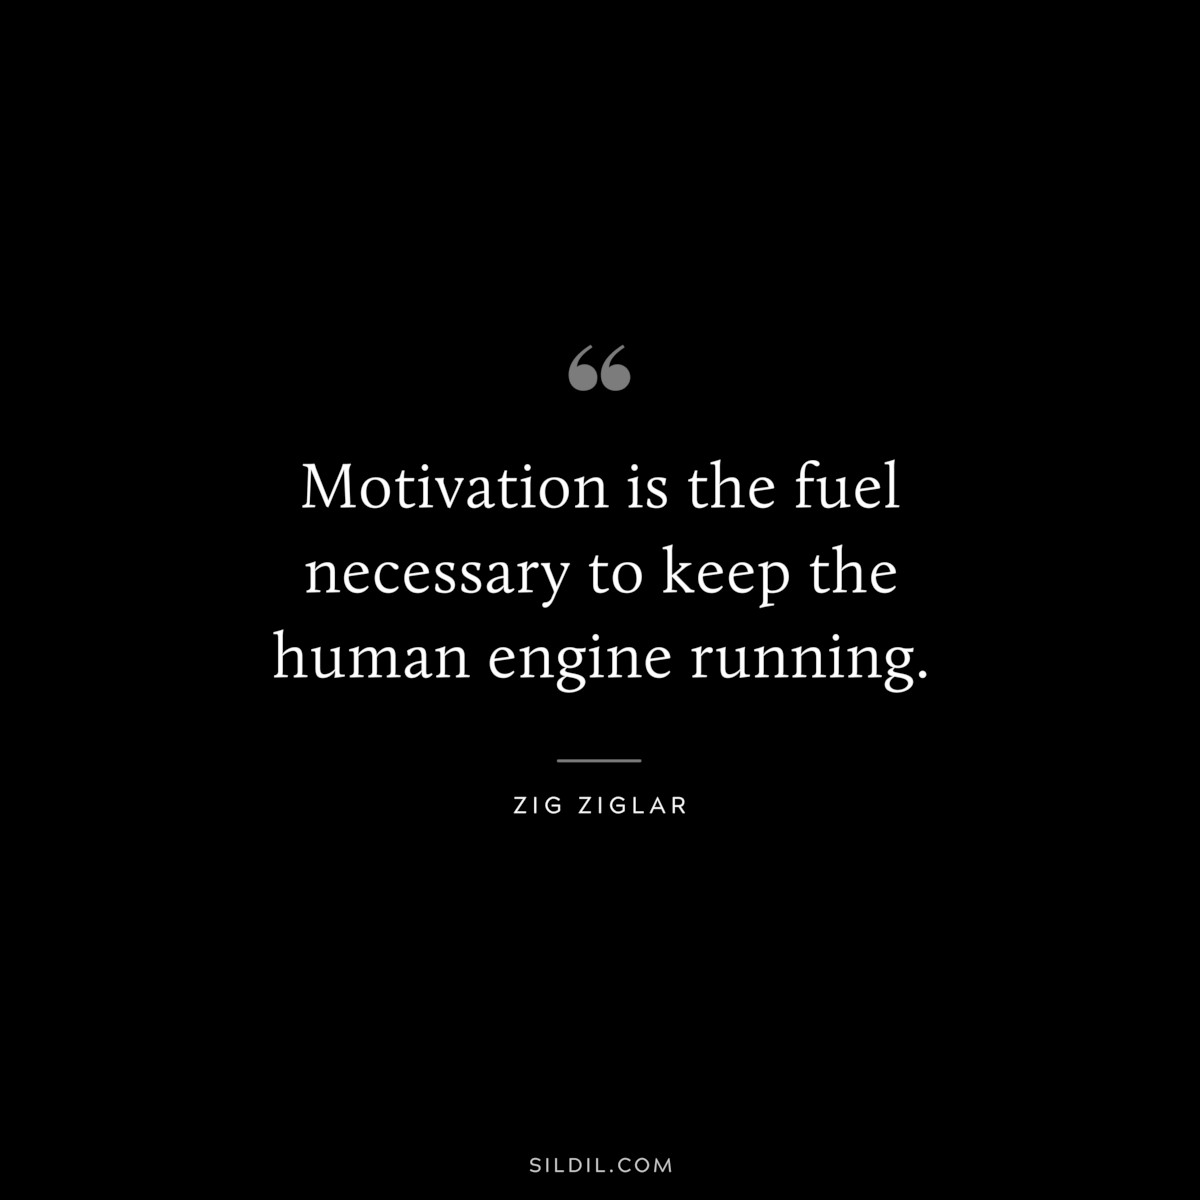 Motivation is the fuel necessary to keep the human engine running. ― Zig Ziglar